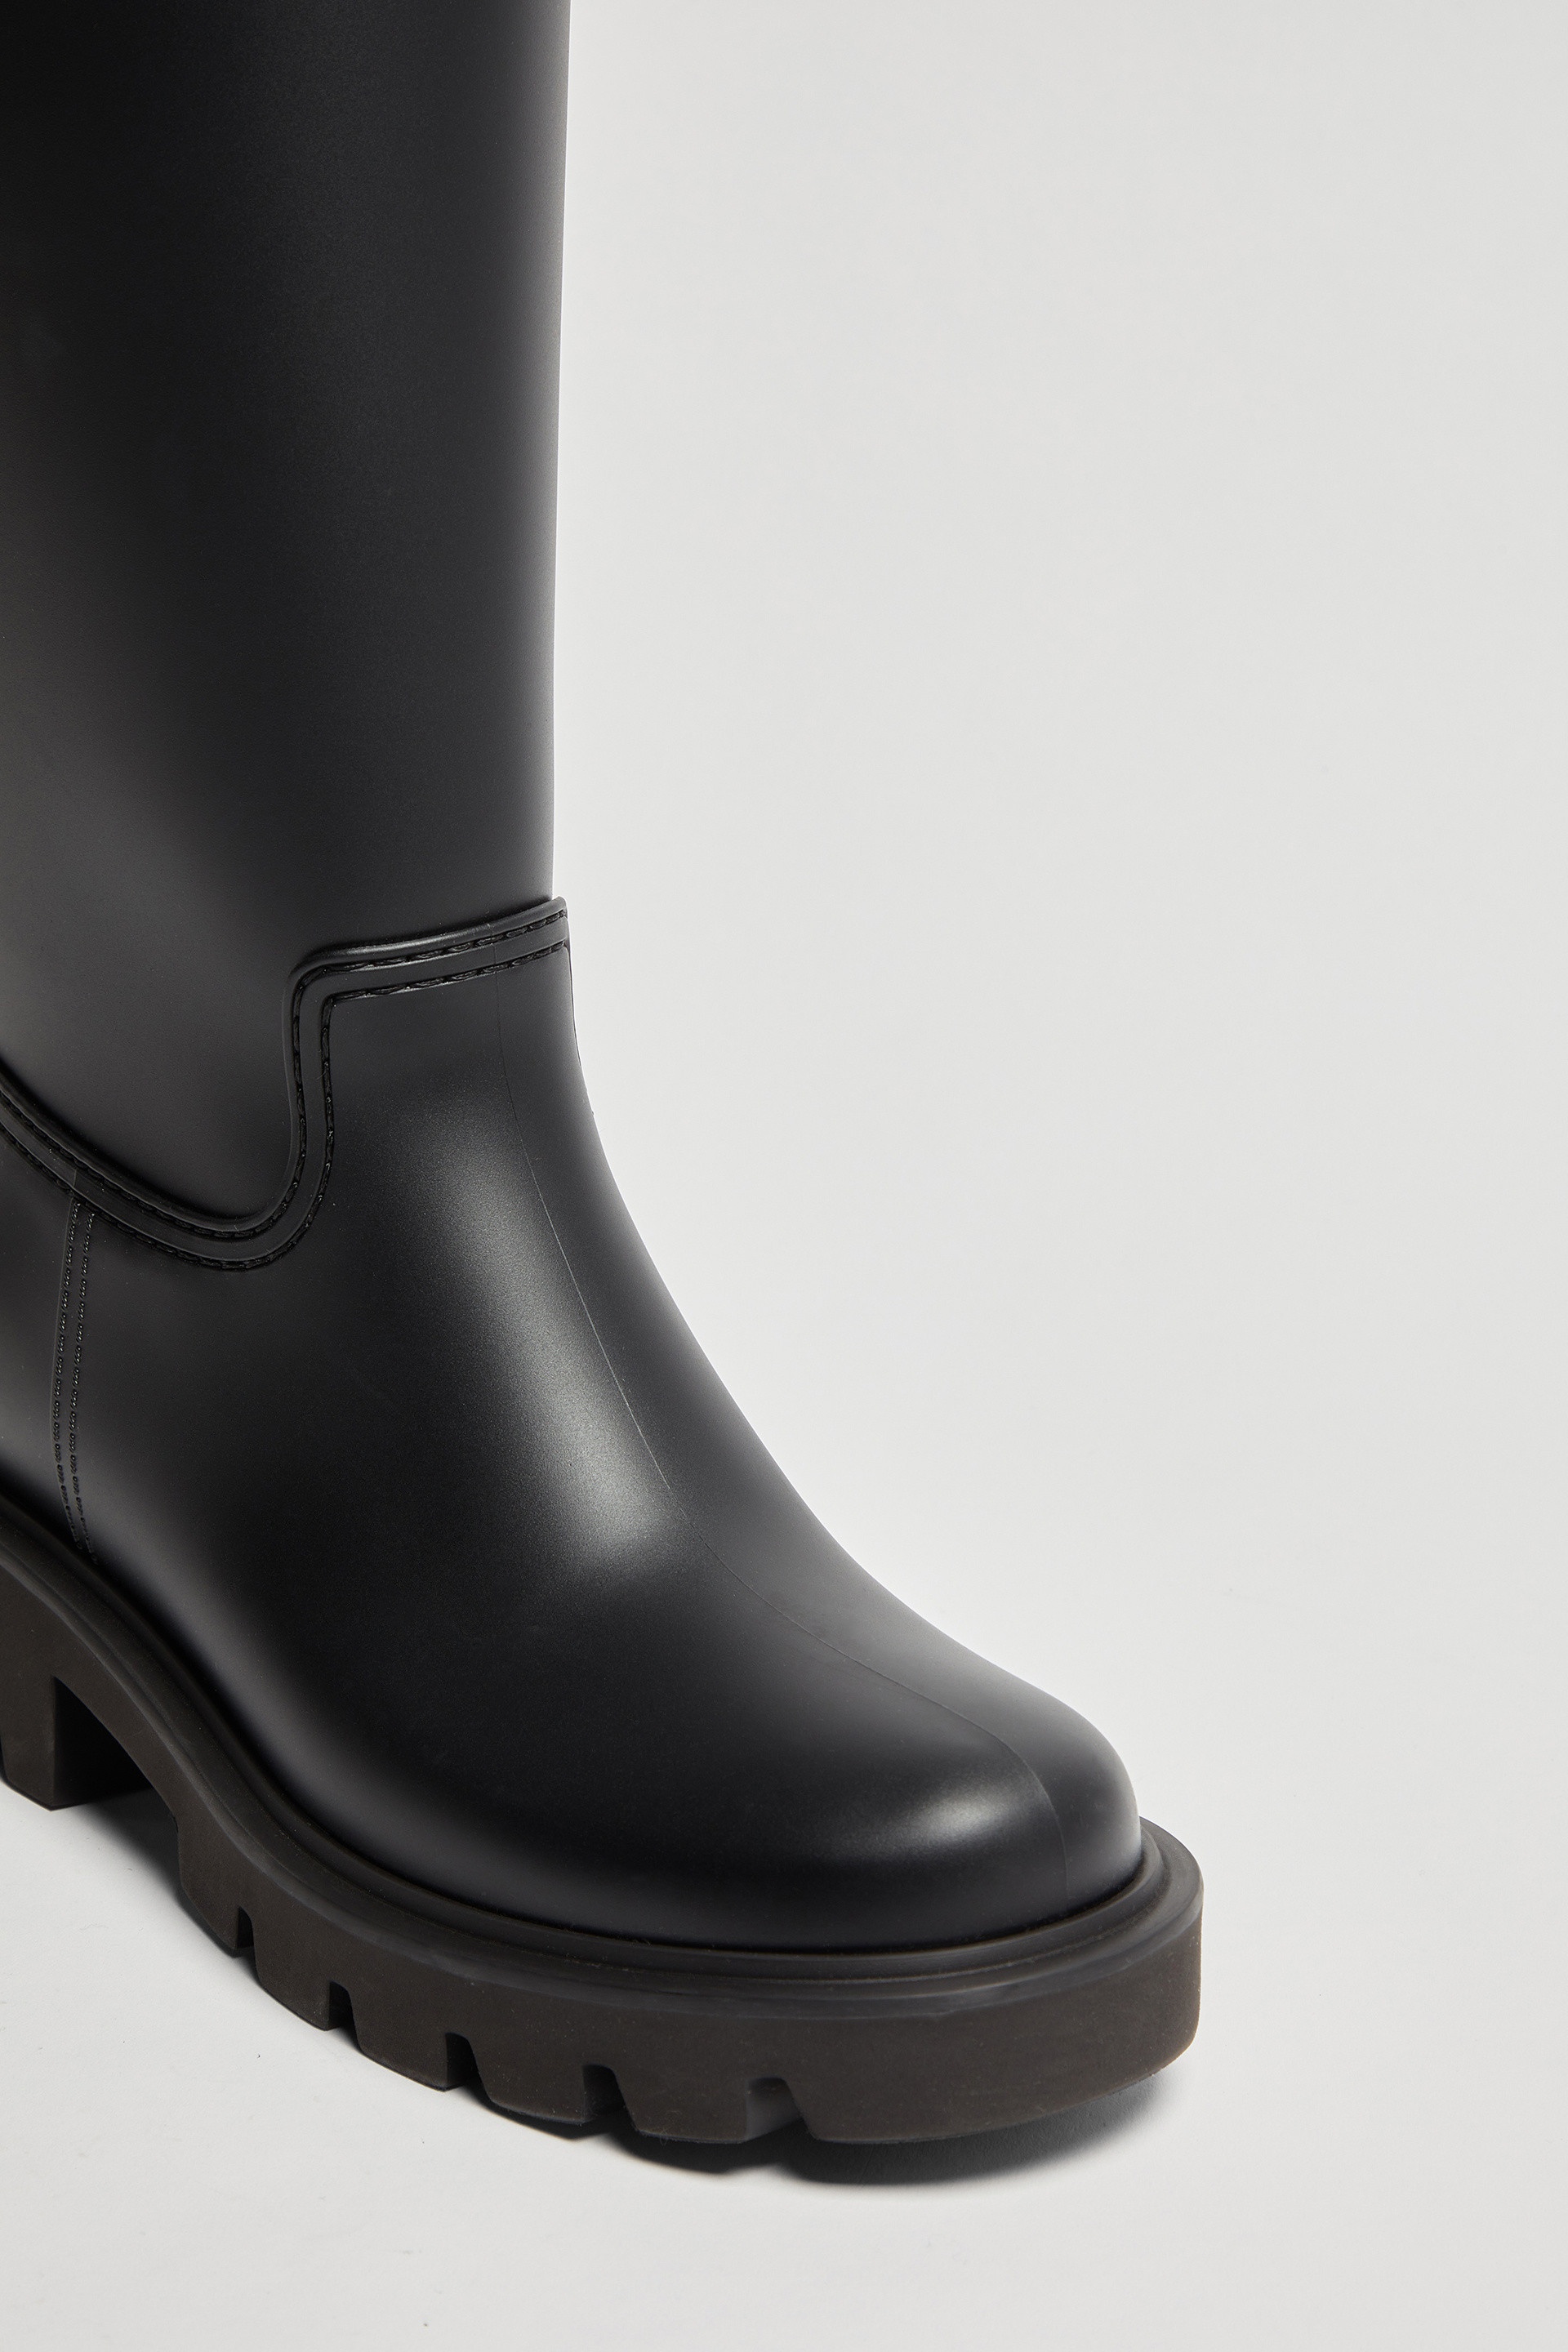 Kickstream High Rain Boots - 3